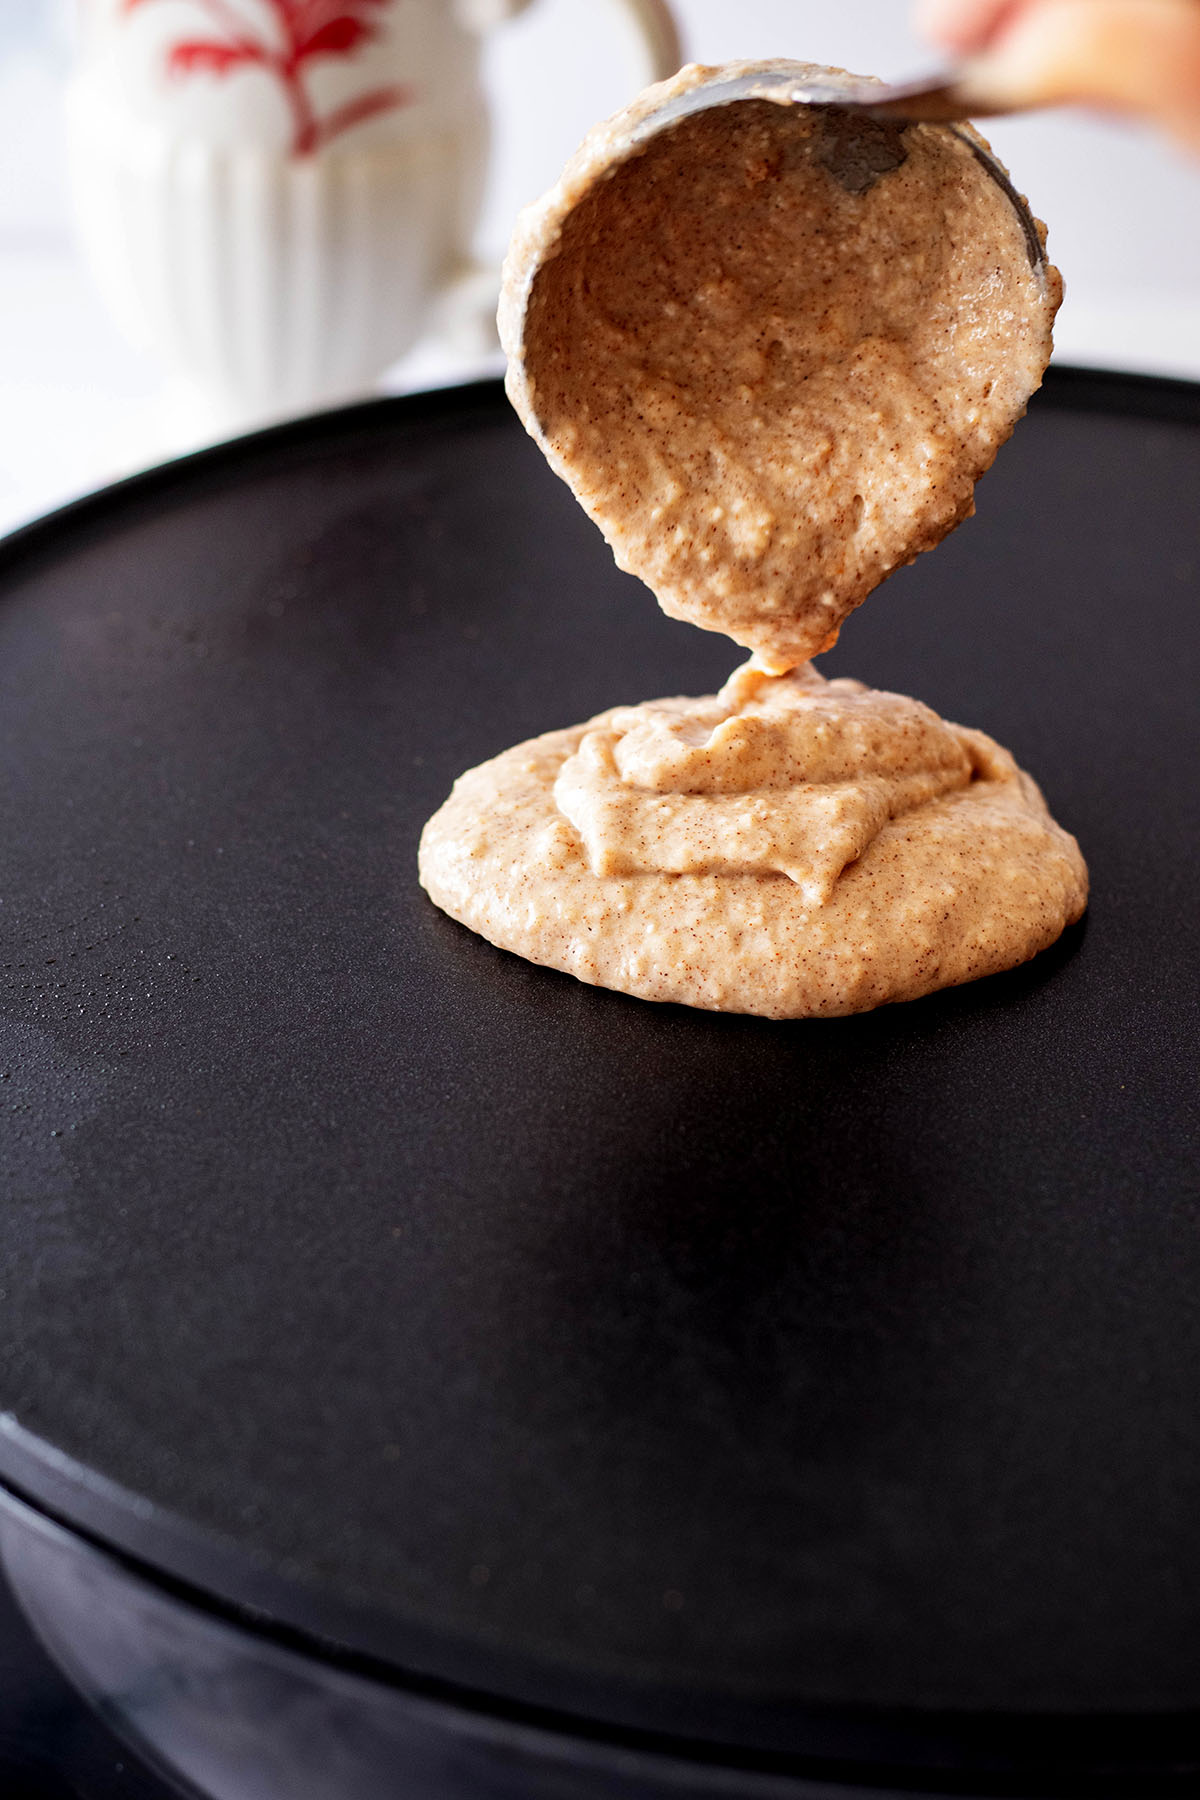 Pancake batter being ladled onto a griddle